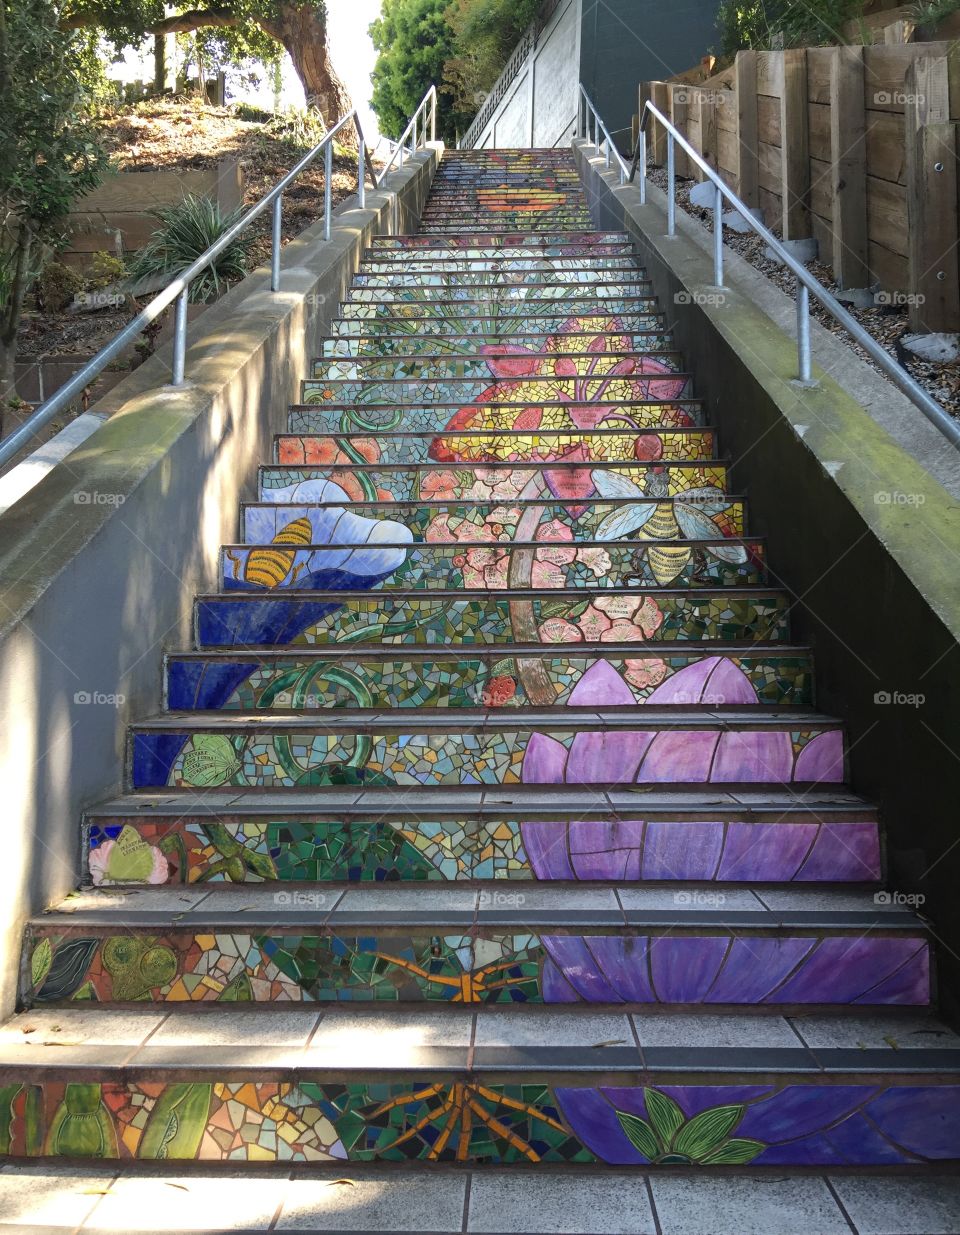 16th avenue and moraga mosaic tile
San Francisco, California 